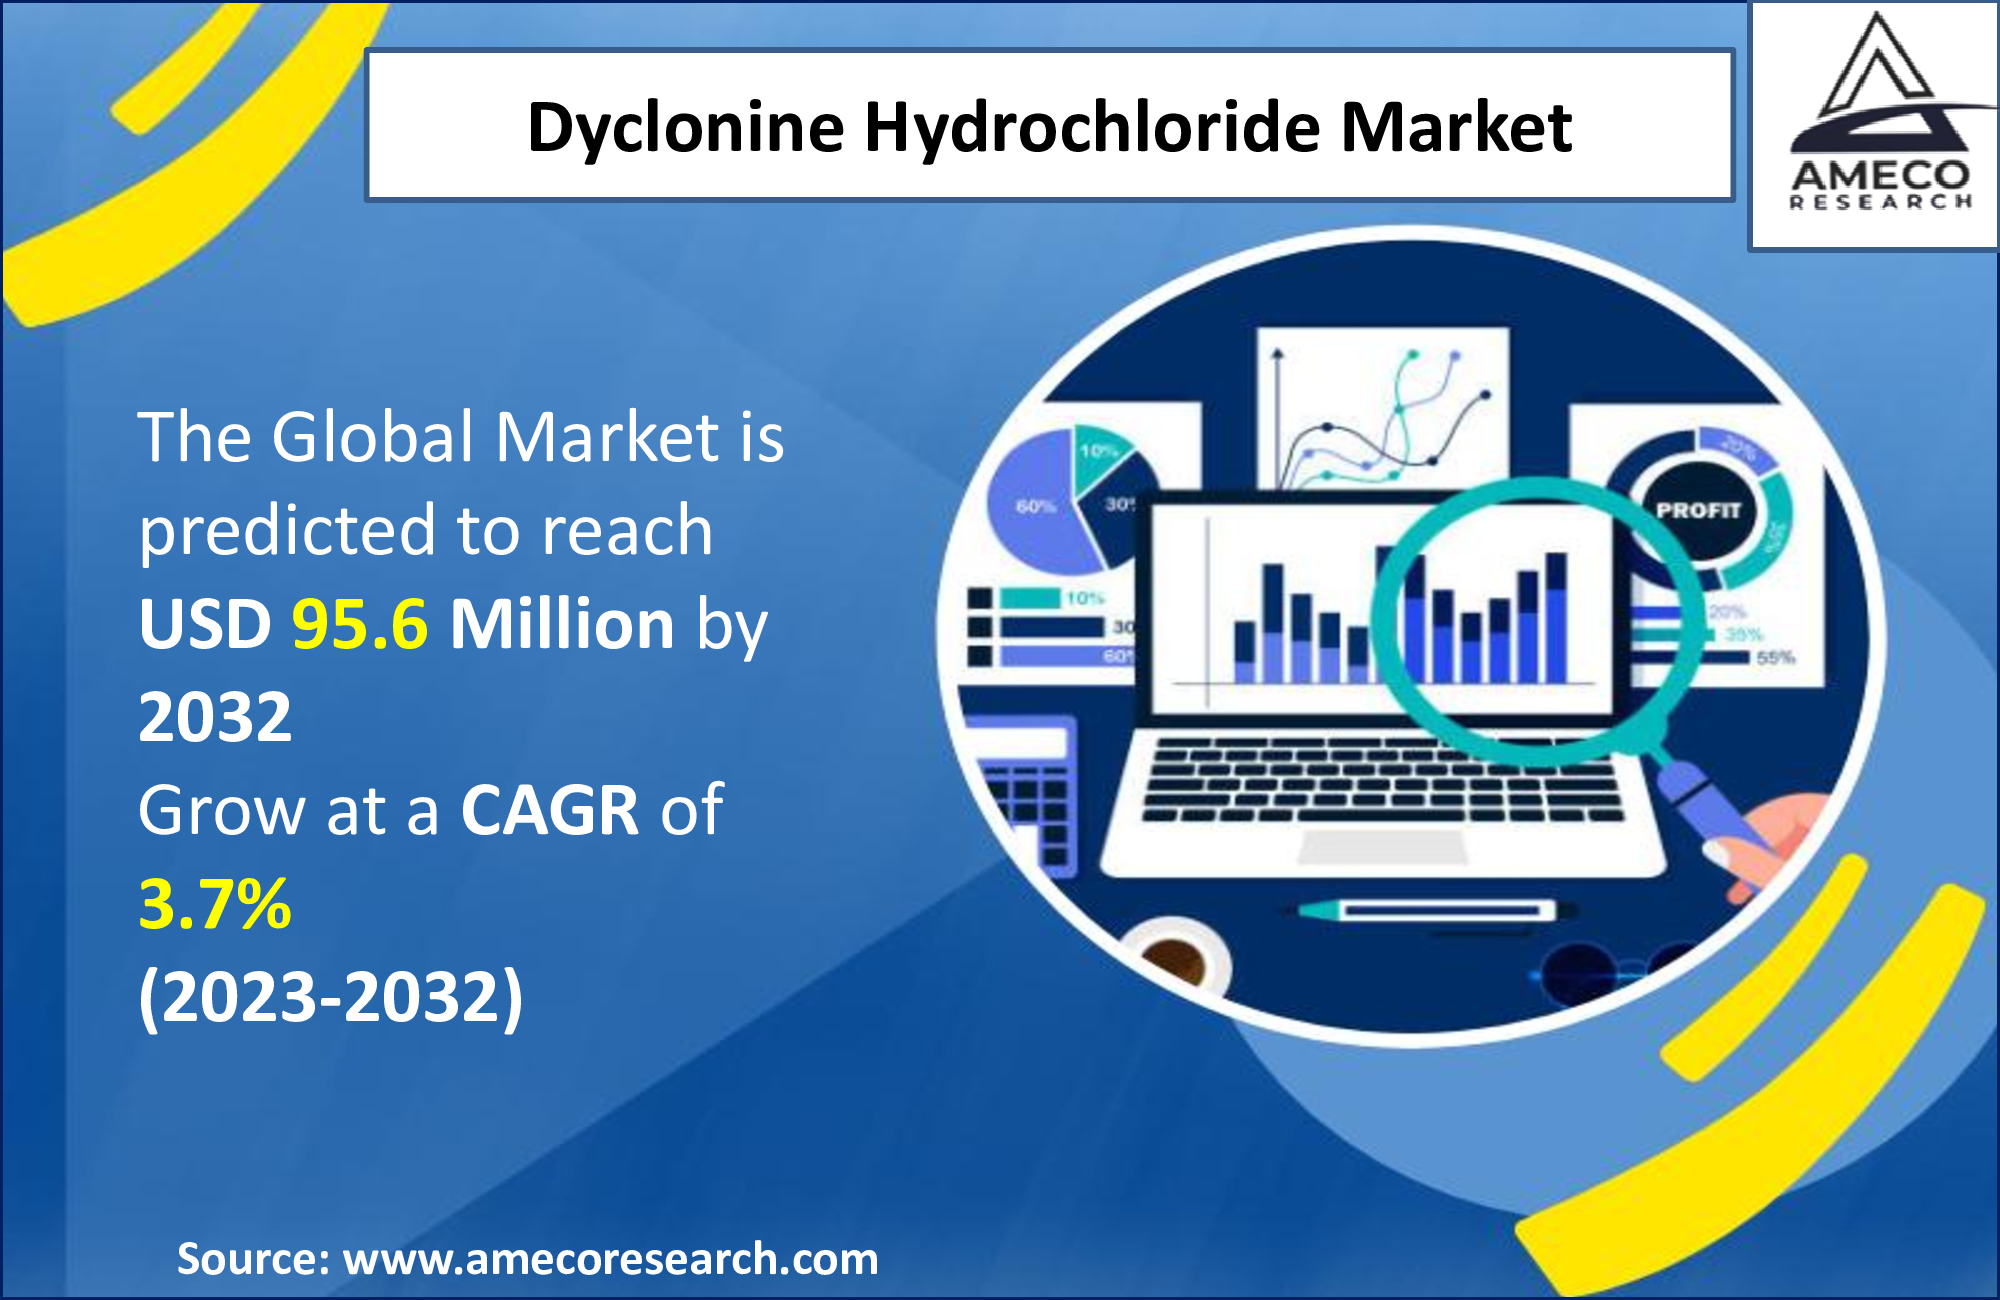 Dyclonine Hydrochloride Market